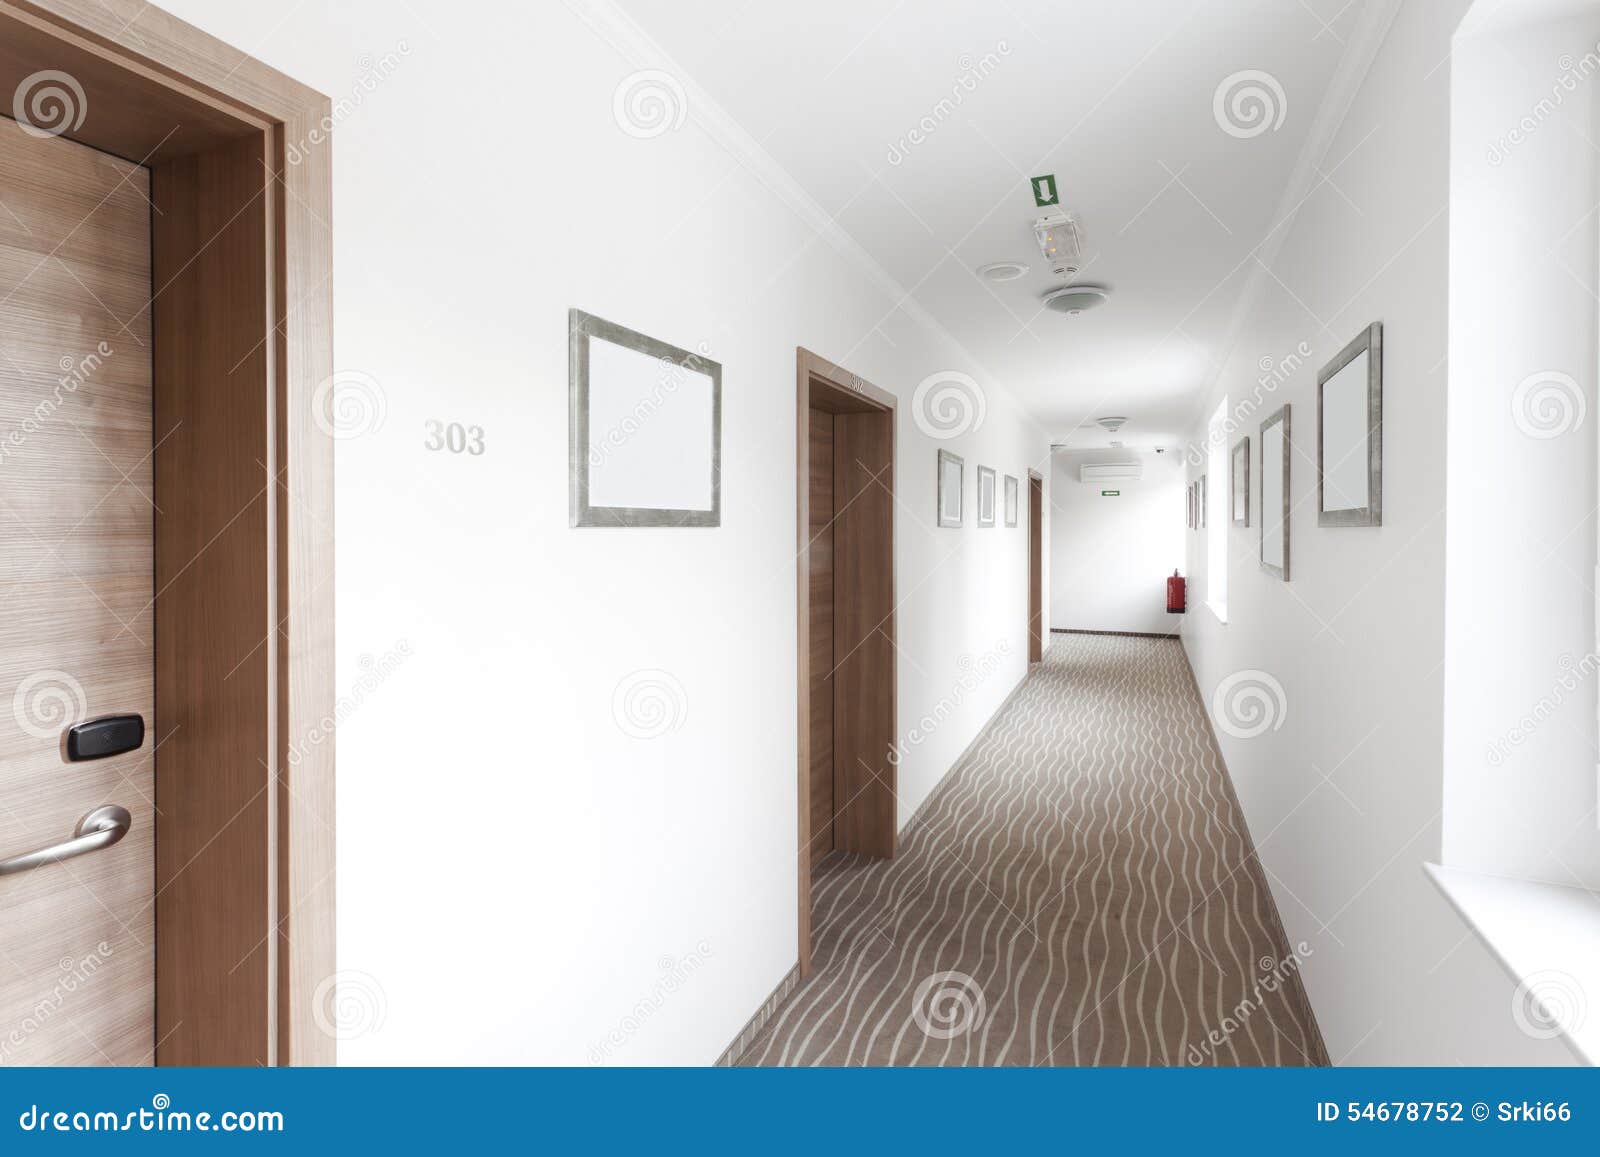 hotel hallway